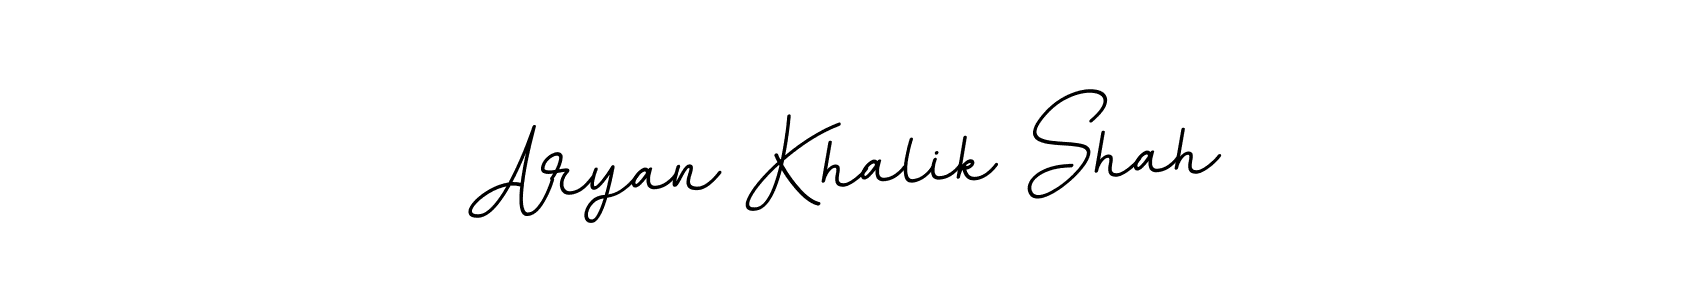 How to Draw Aryan Khalik Shah signature style? BallpointsItalic-DORy9 is a latest design signature styles for name Aryan Khalik Shah. Aryan Khalik Shah signature style 11 images and pictures png